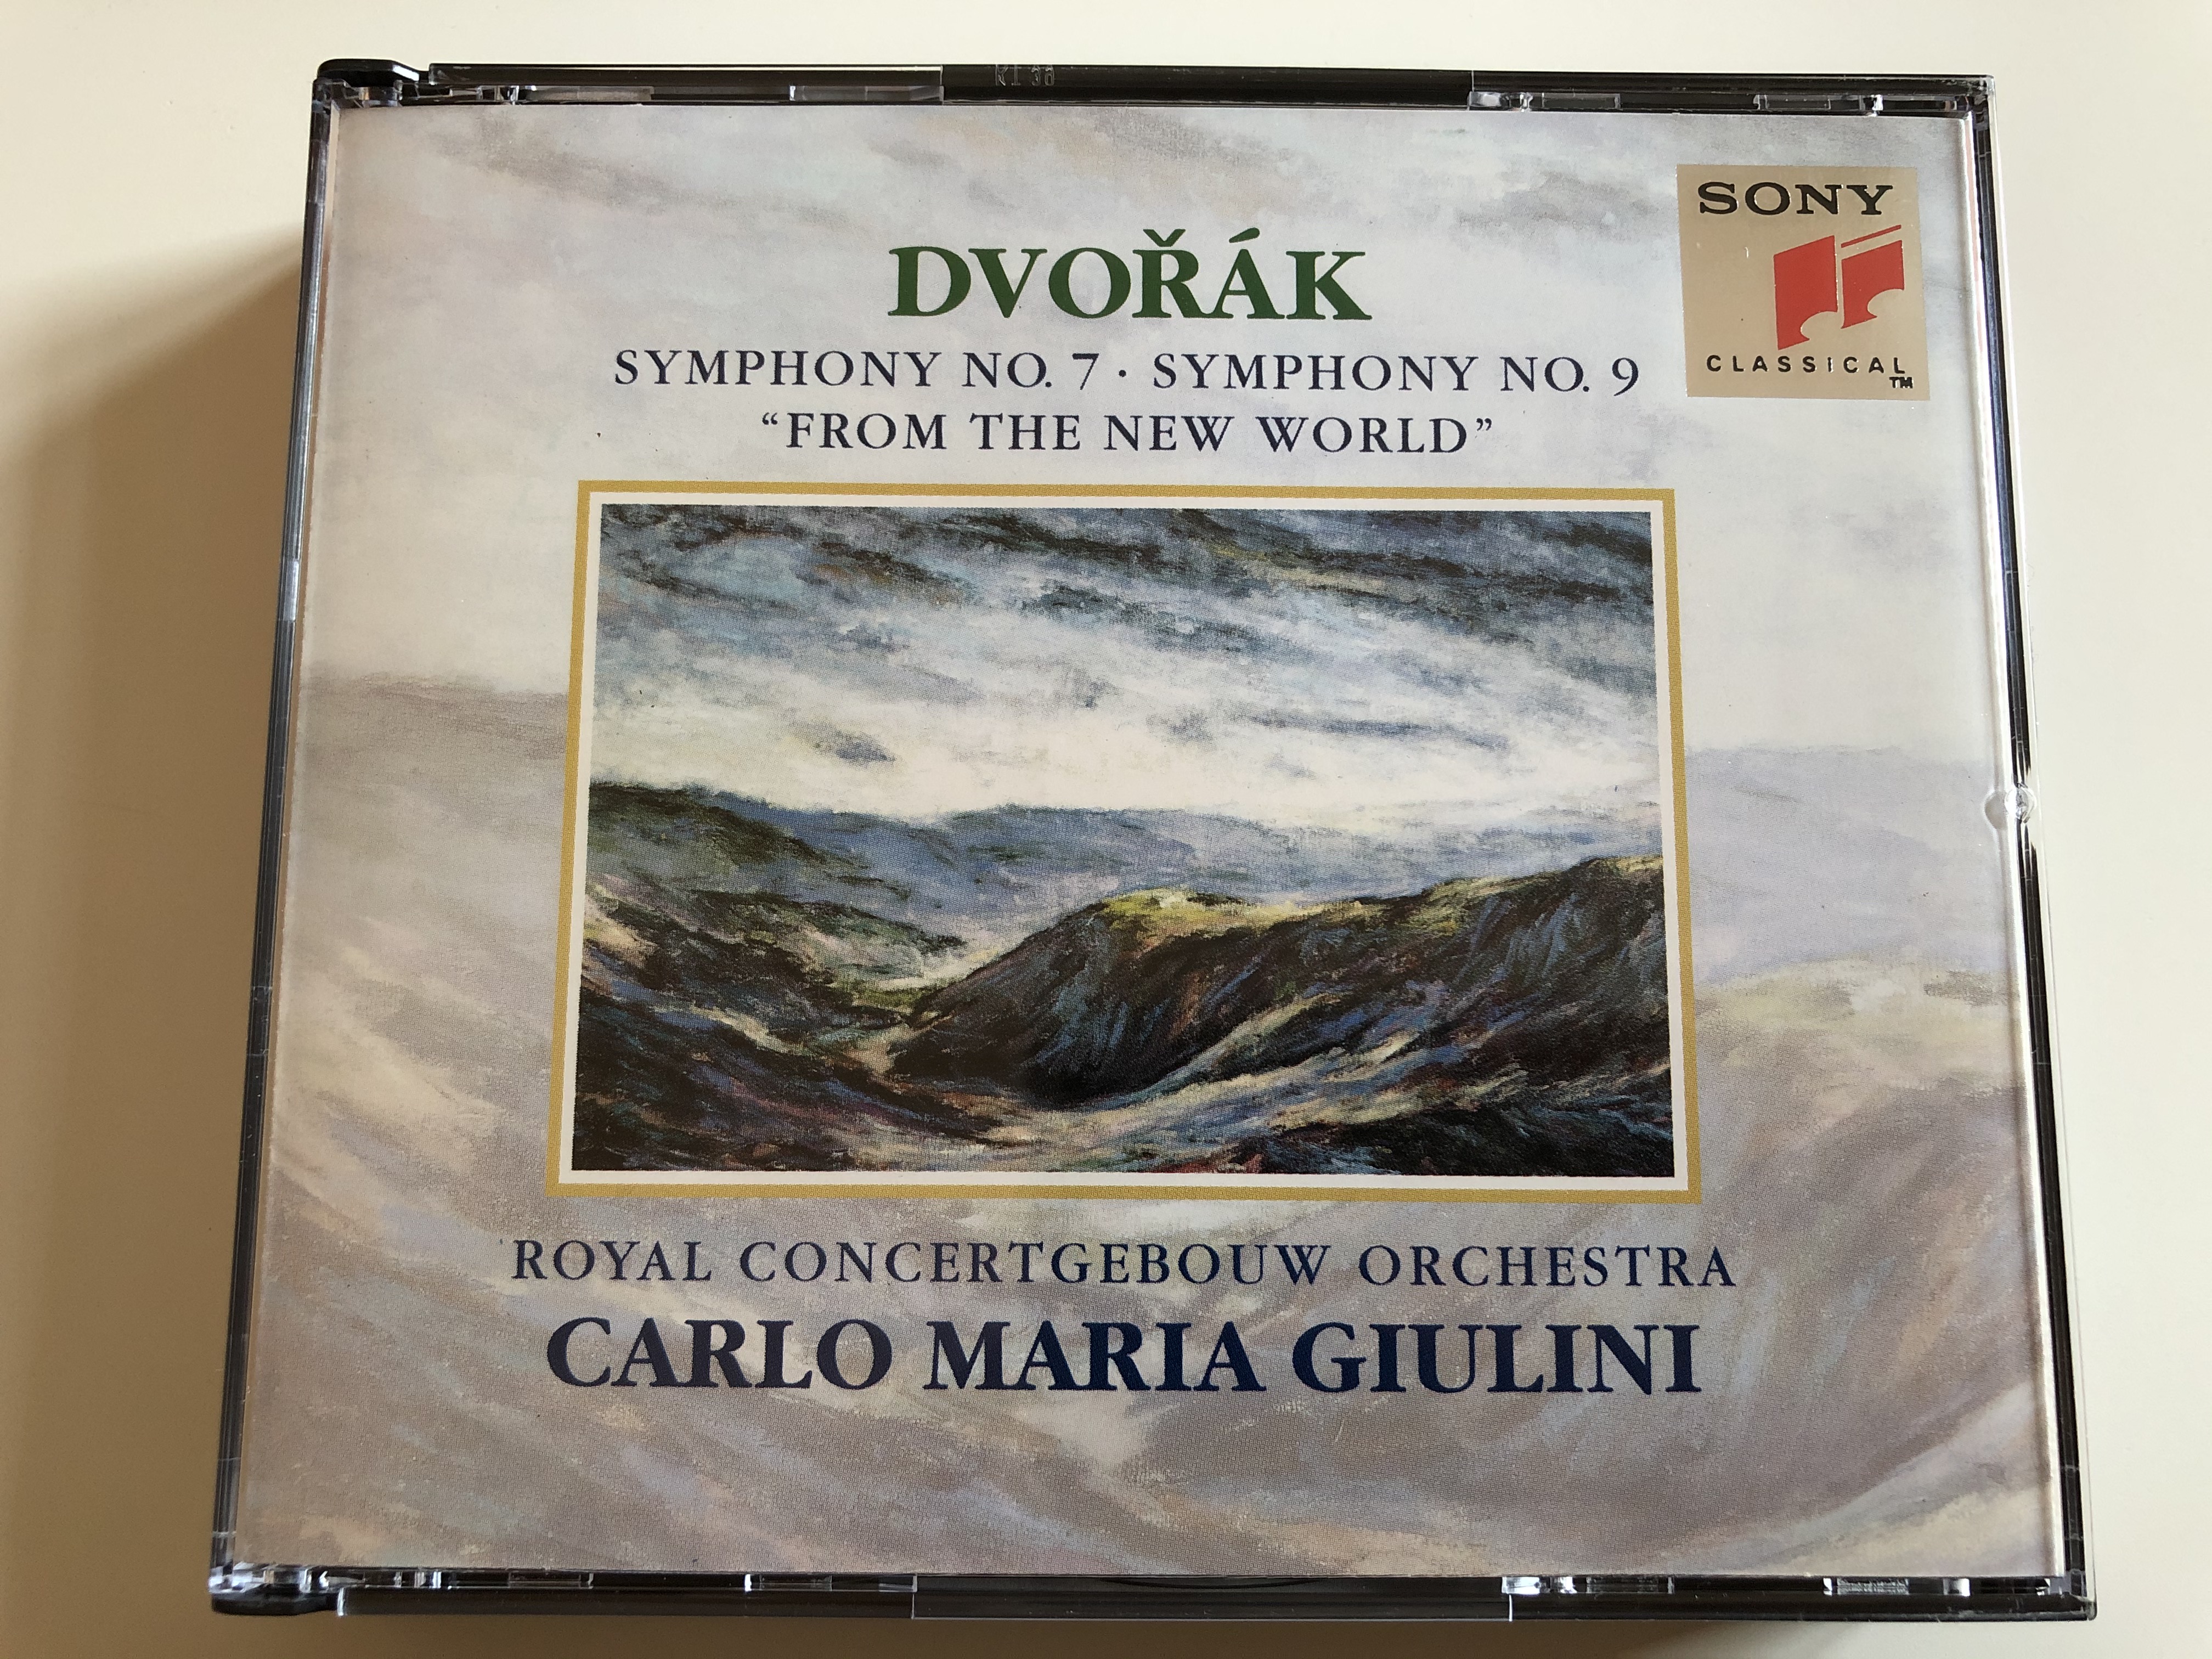 dvo-k-symphony-no.7-symphony-no.9-from-the-new-world-royal-concertgebouw-orchestra-carlo-maria-giulini-sony-classical-2x-audio-cd-1994-sx2k-58946-1-.jpg